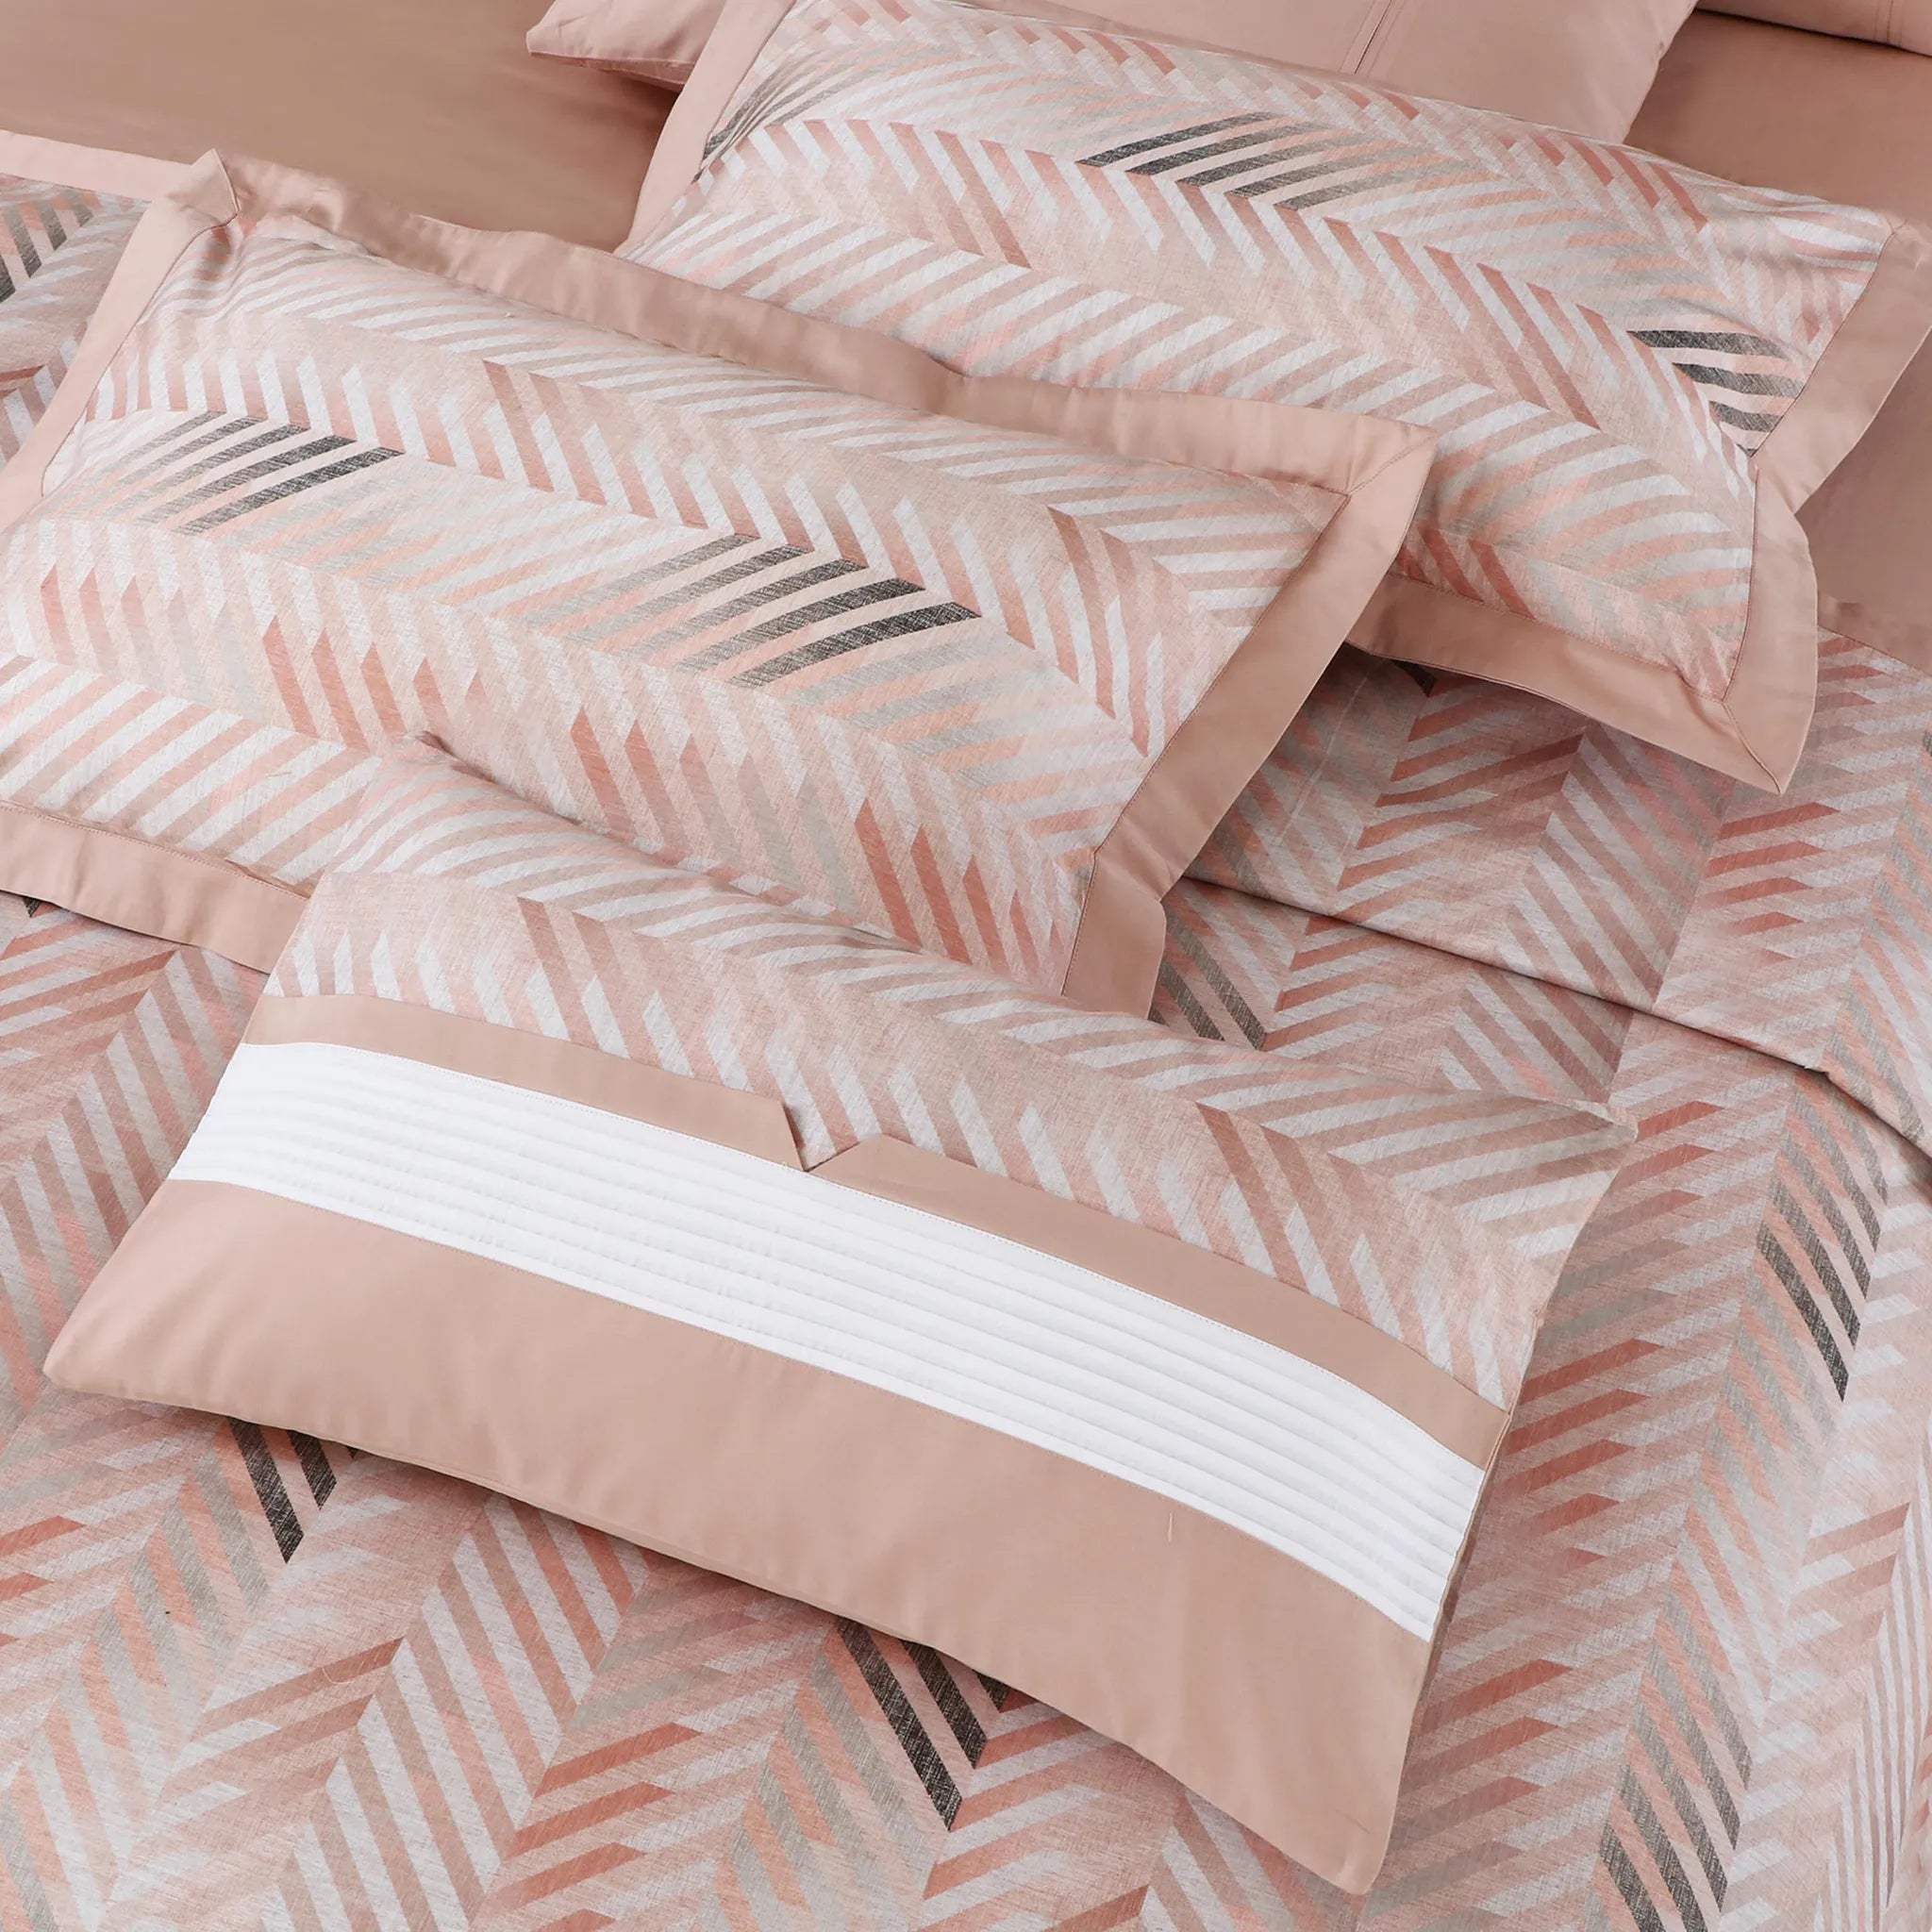 Malako Caèn 500TC 100% Egyptian Cotton Peach Modern Abstract 7 Piece Bedding Set - MALAKO